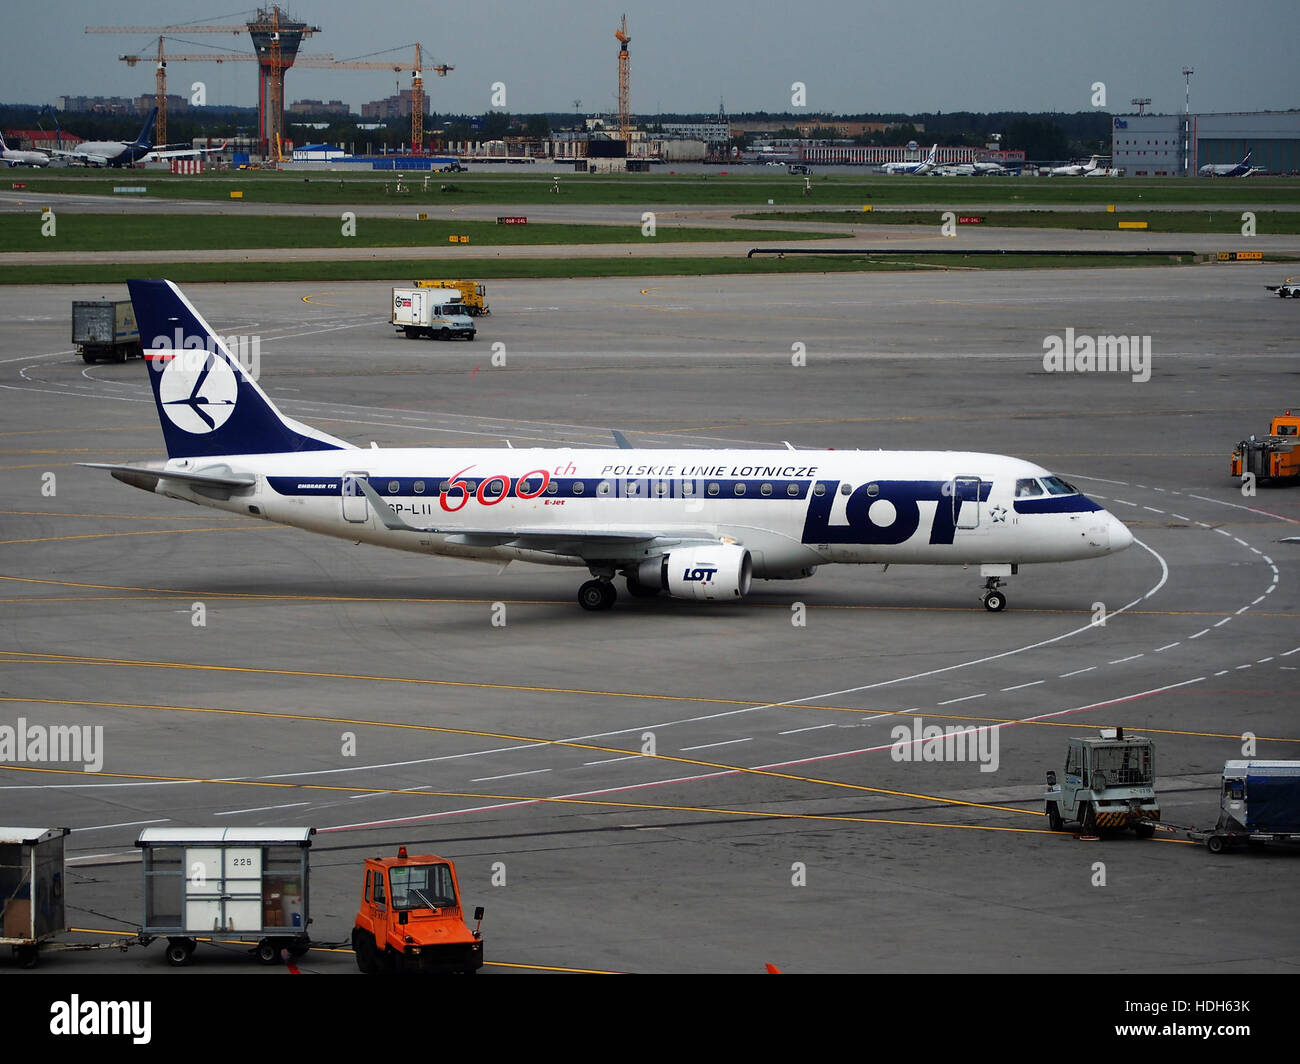 SP-LII (aircraft) at Sheremetyevo International Airport pic3 Stock Photo